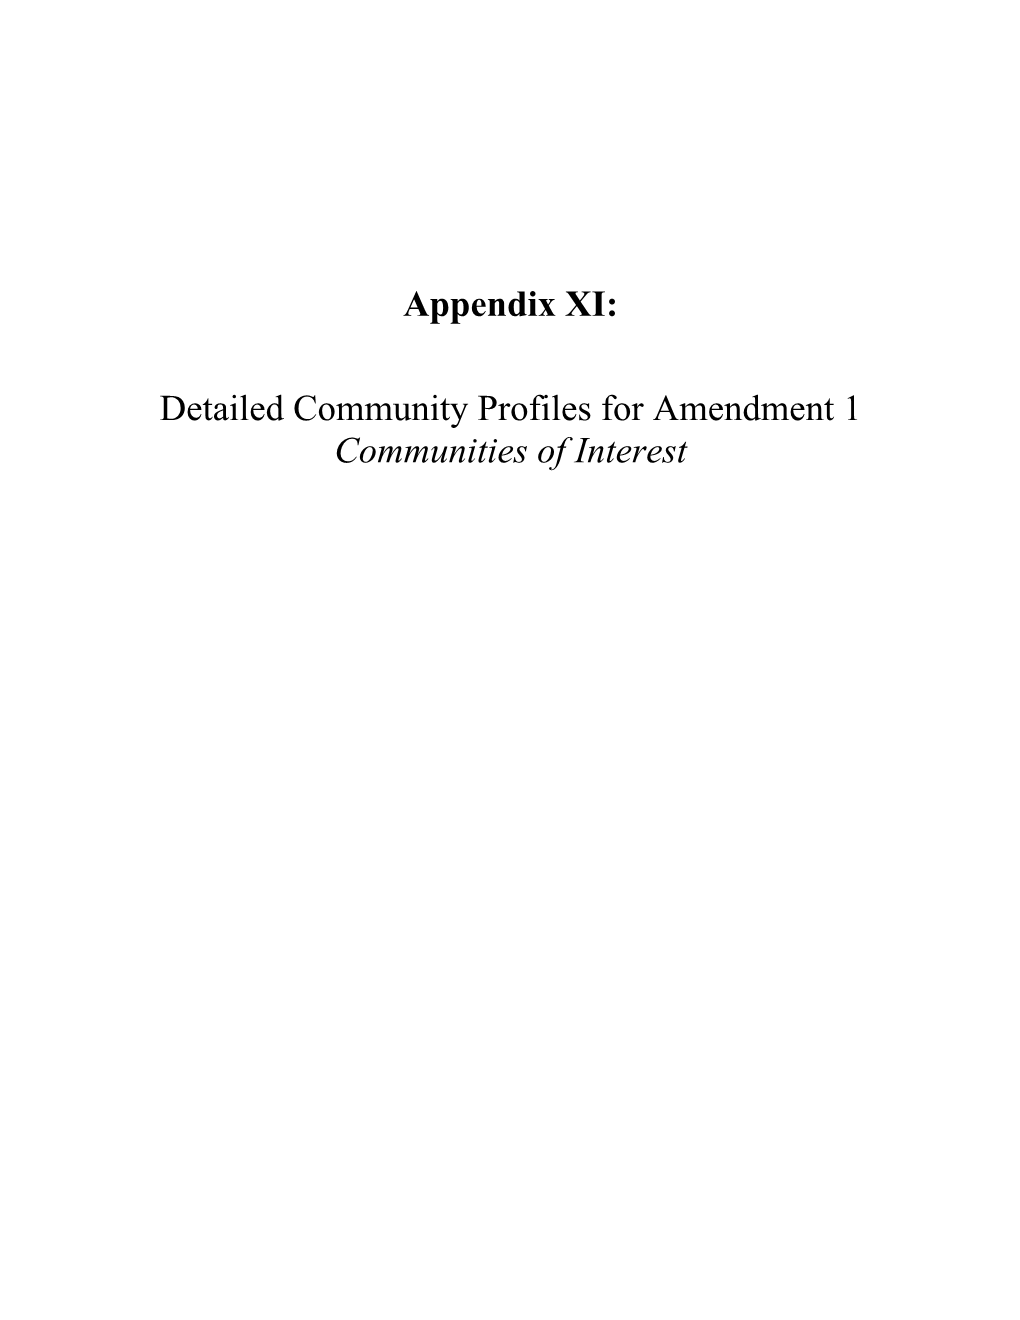 Appendix XI: Detailed Community Profiles for Amendment 1 Communities of Interest